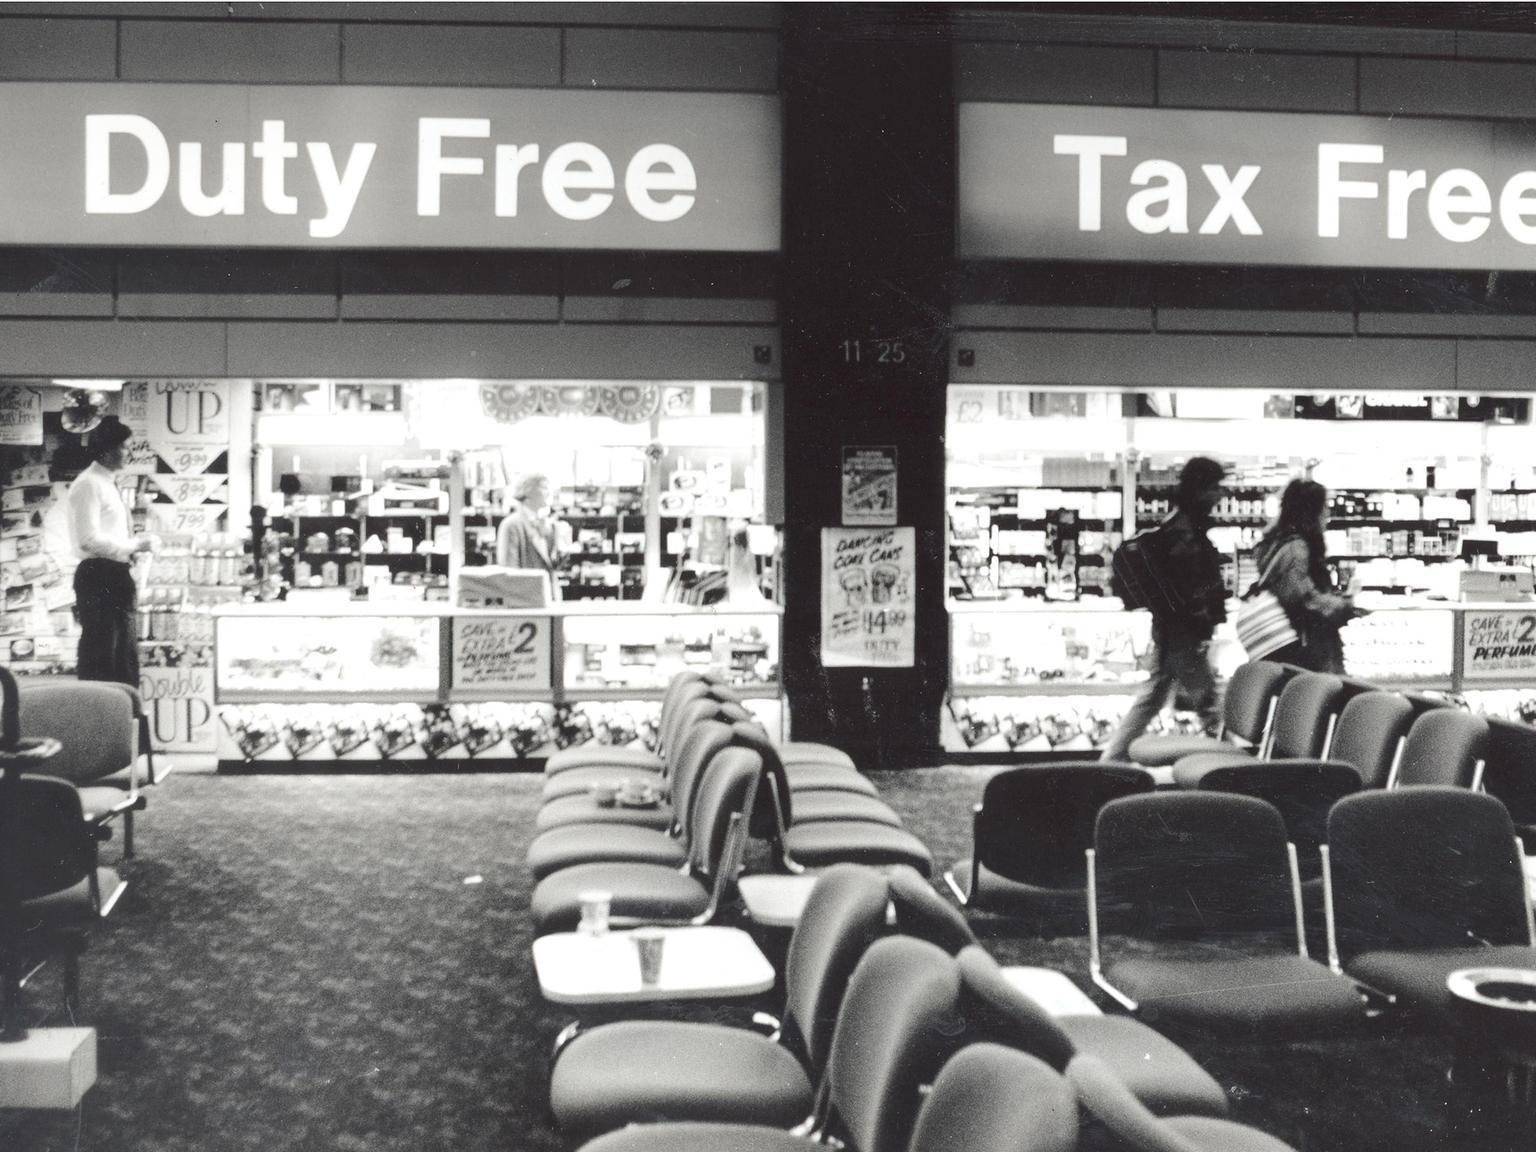 Leeds Bradford stood to lose around 750,000 pounds under plans to abolish duty free shopping.